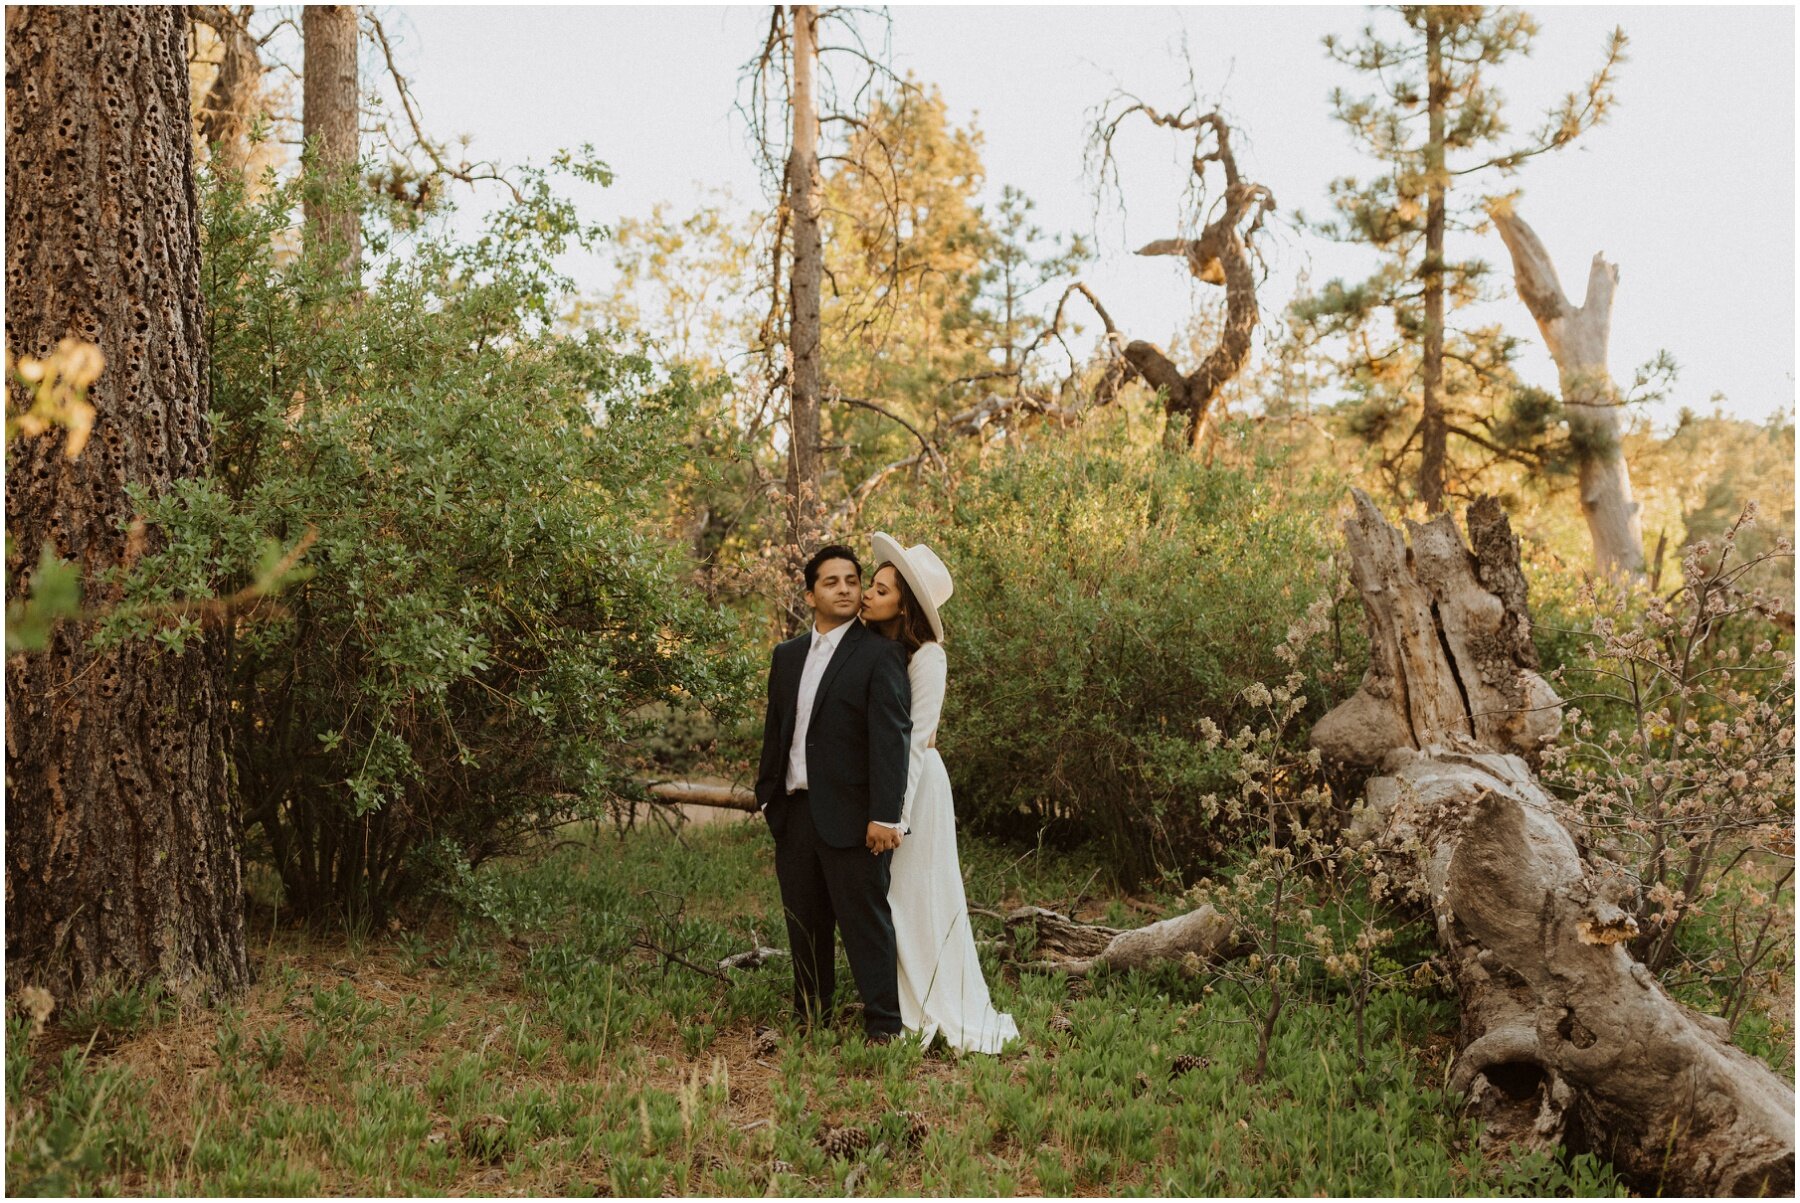 desert engagement session in california - erika greene photography - couples photographer_0018.jpg